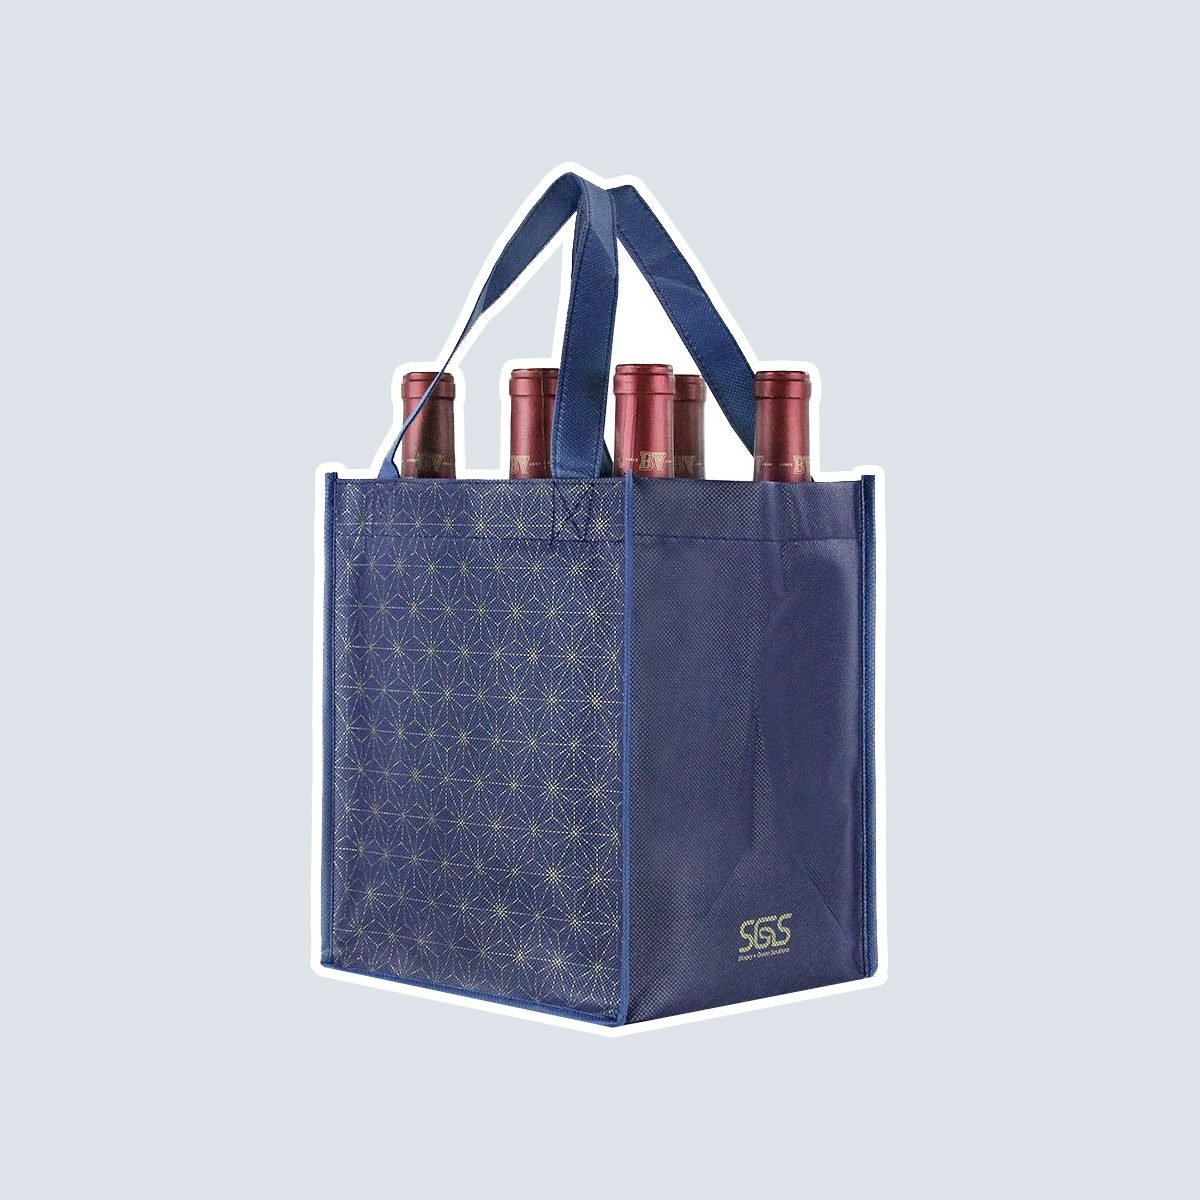 6 Bottle Wine Carrier Bag, Reusable Wine Bottle Tote Bag, Portable